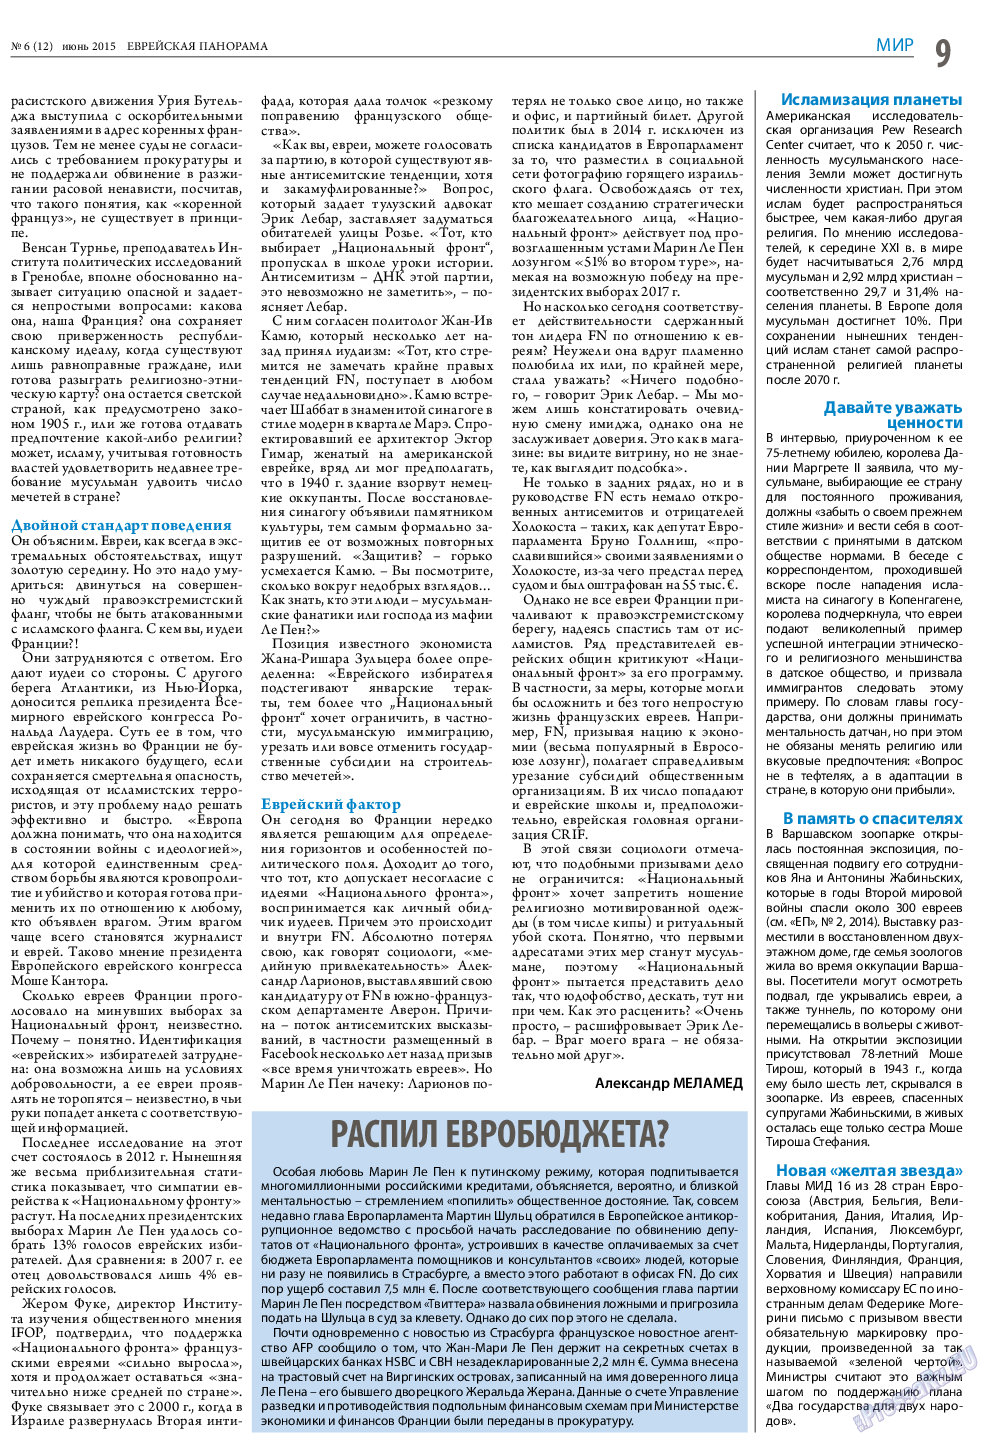 Еврейская панорама, газета. 2015 №6 стр.9